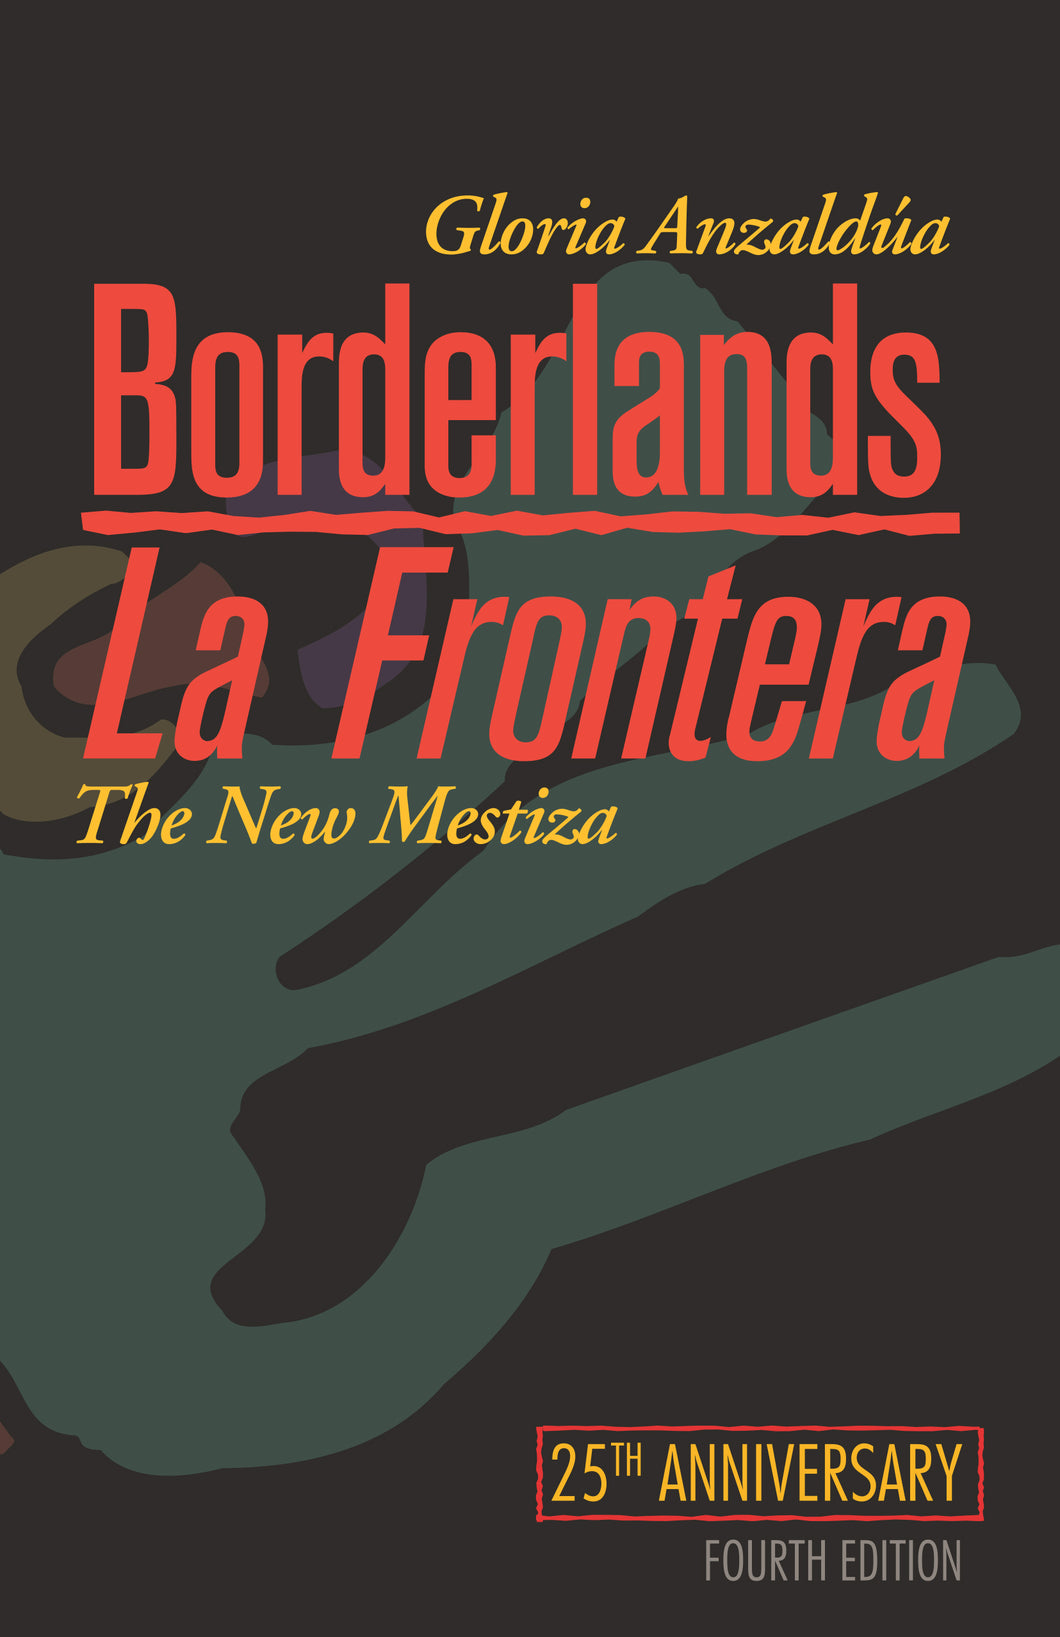 Borderlands / La Frontera: The New Mestiza by Gloria Anzaldúa